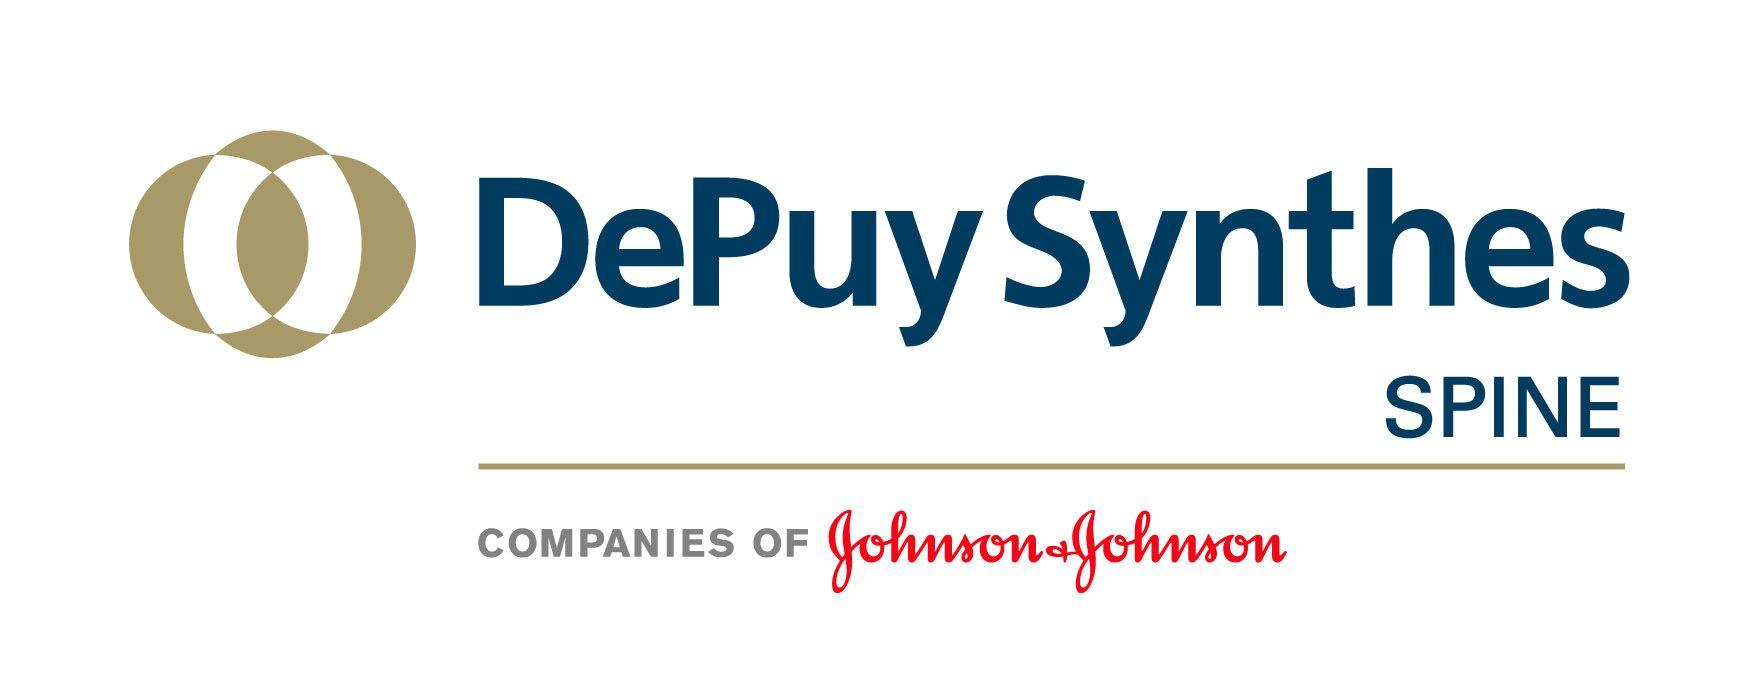 DePuy Logo - Depuy synthes spine Logos